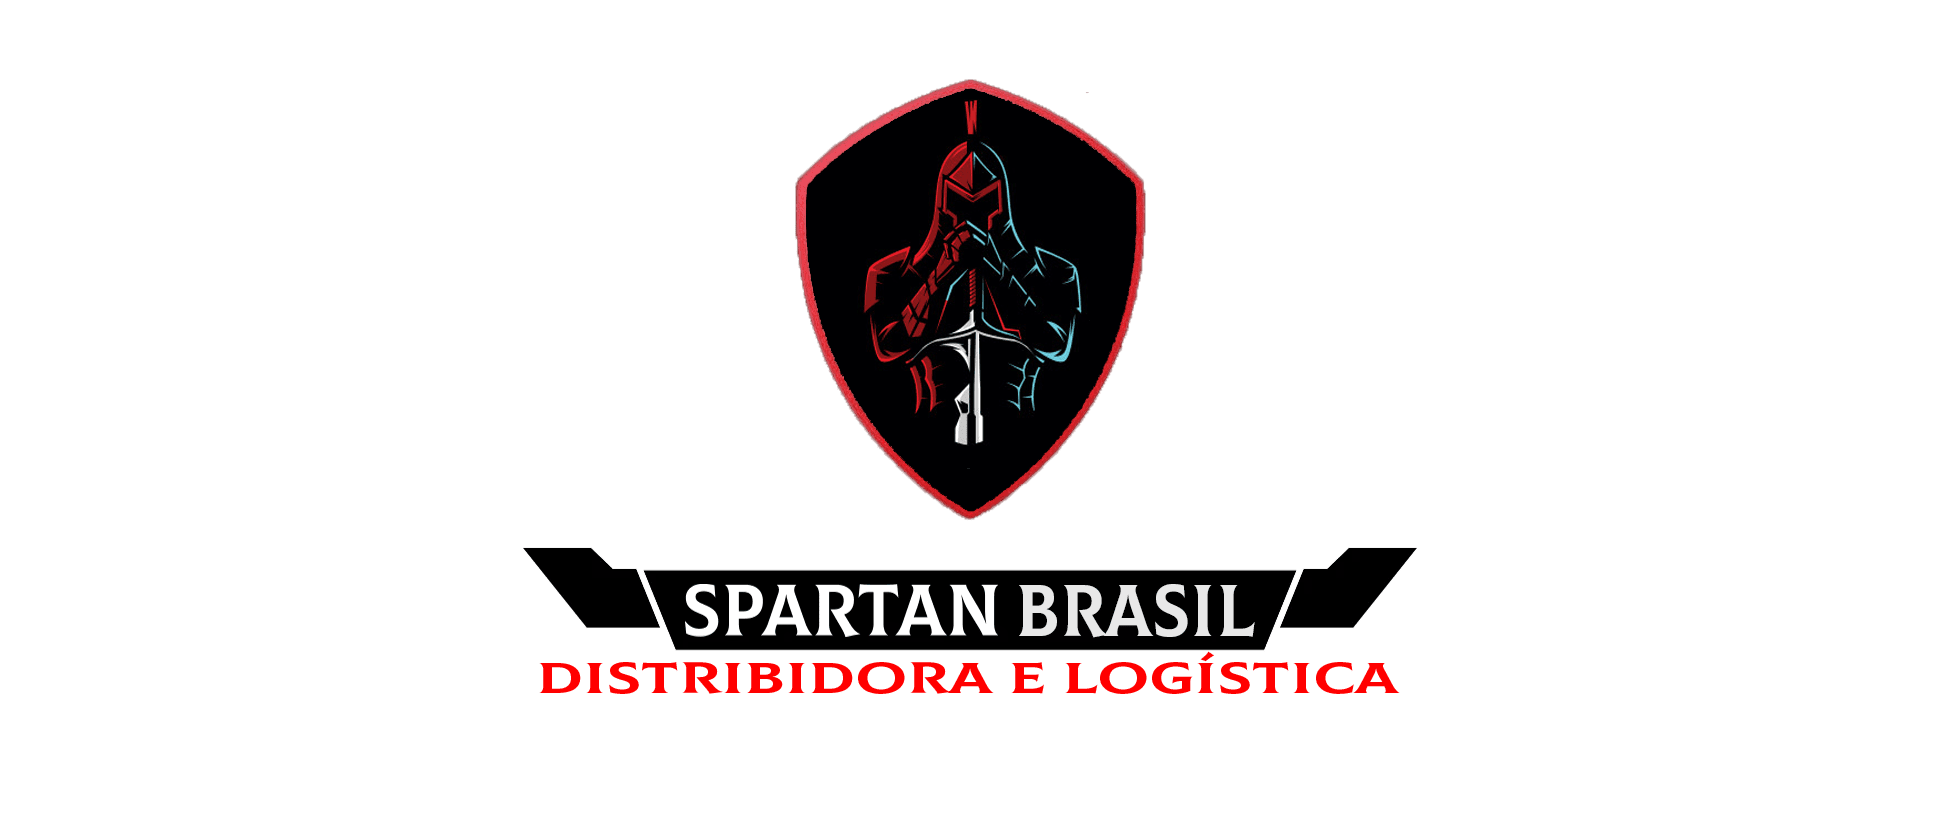 Spartan Brasil Distribuidora e Logística